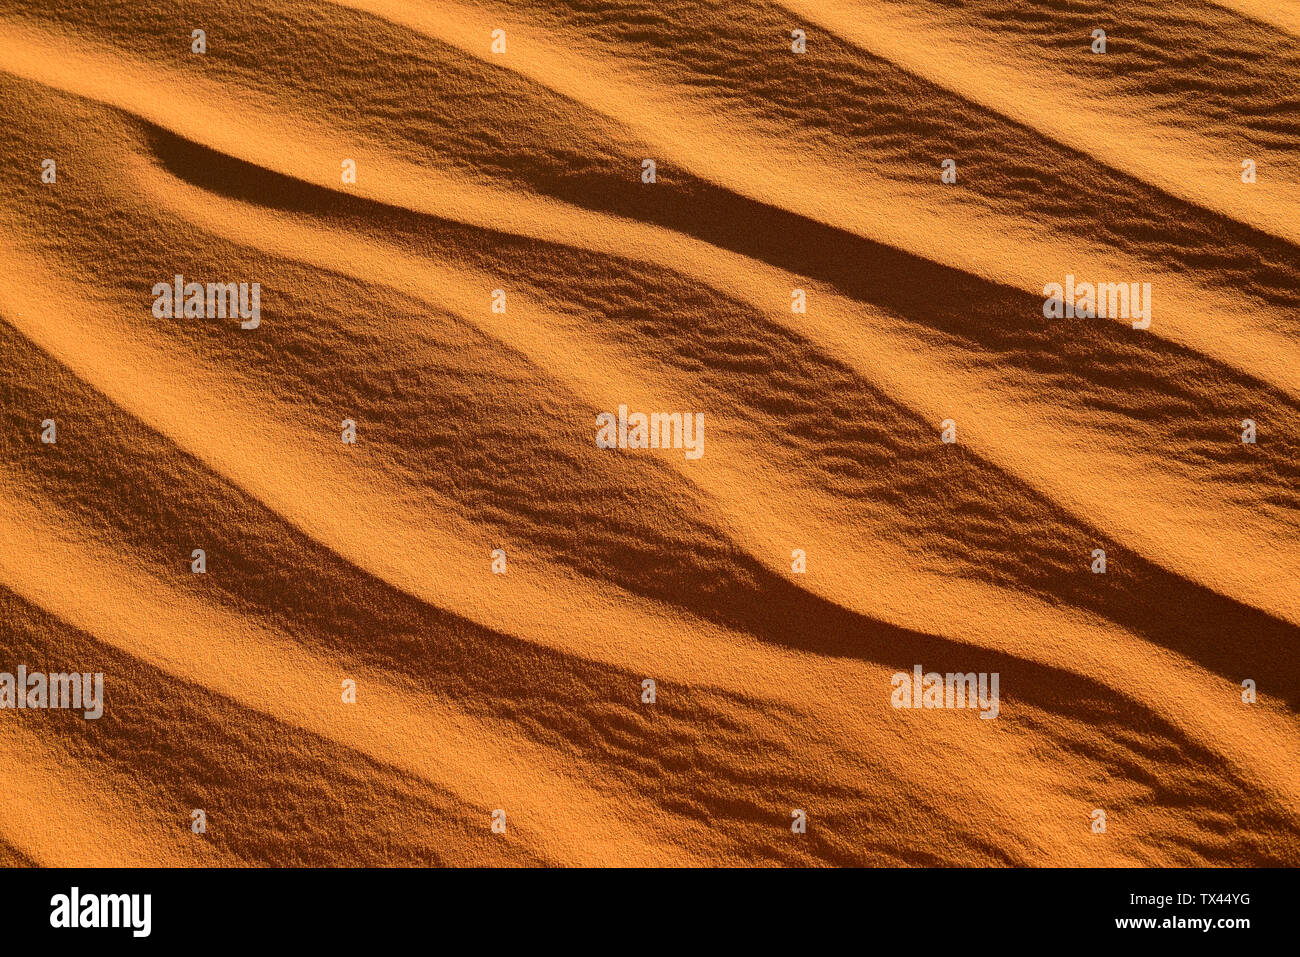 Africa, Algeria, Sahara, ripple marks, texture on a sanddune Stock Photo